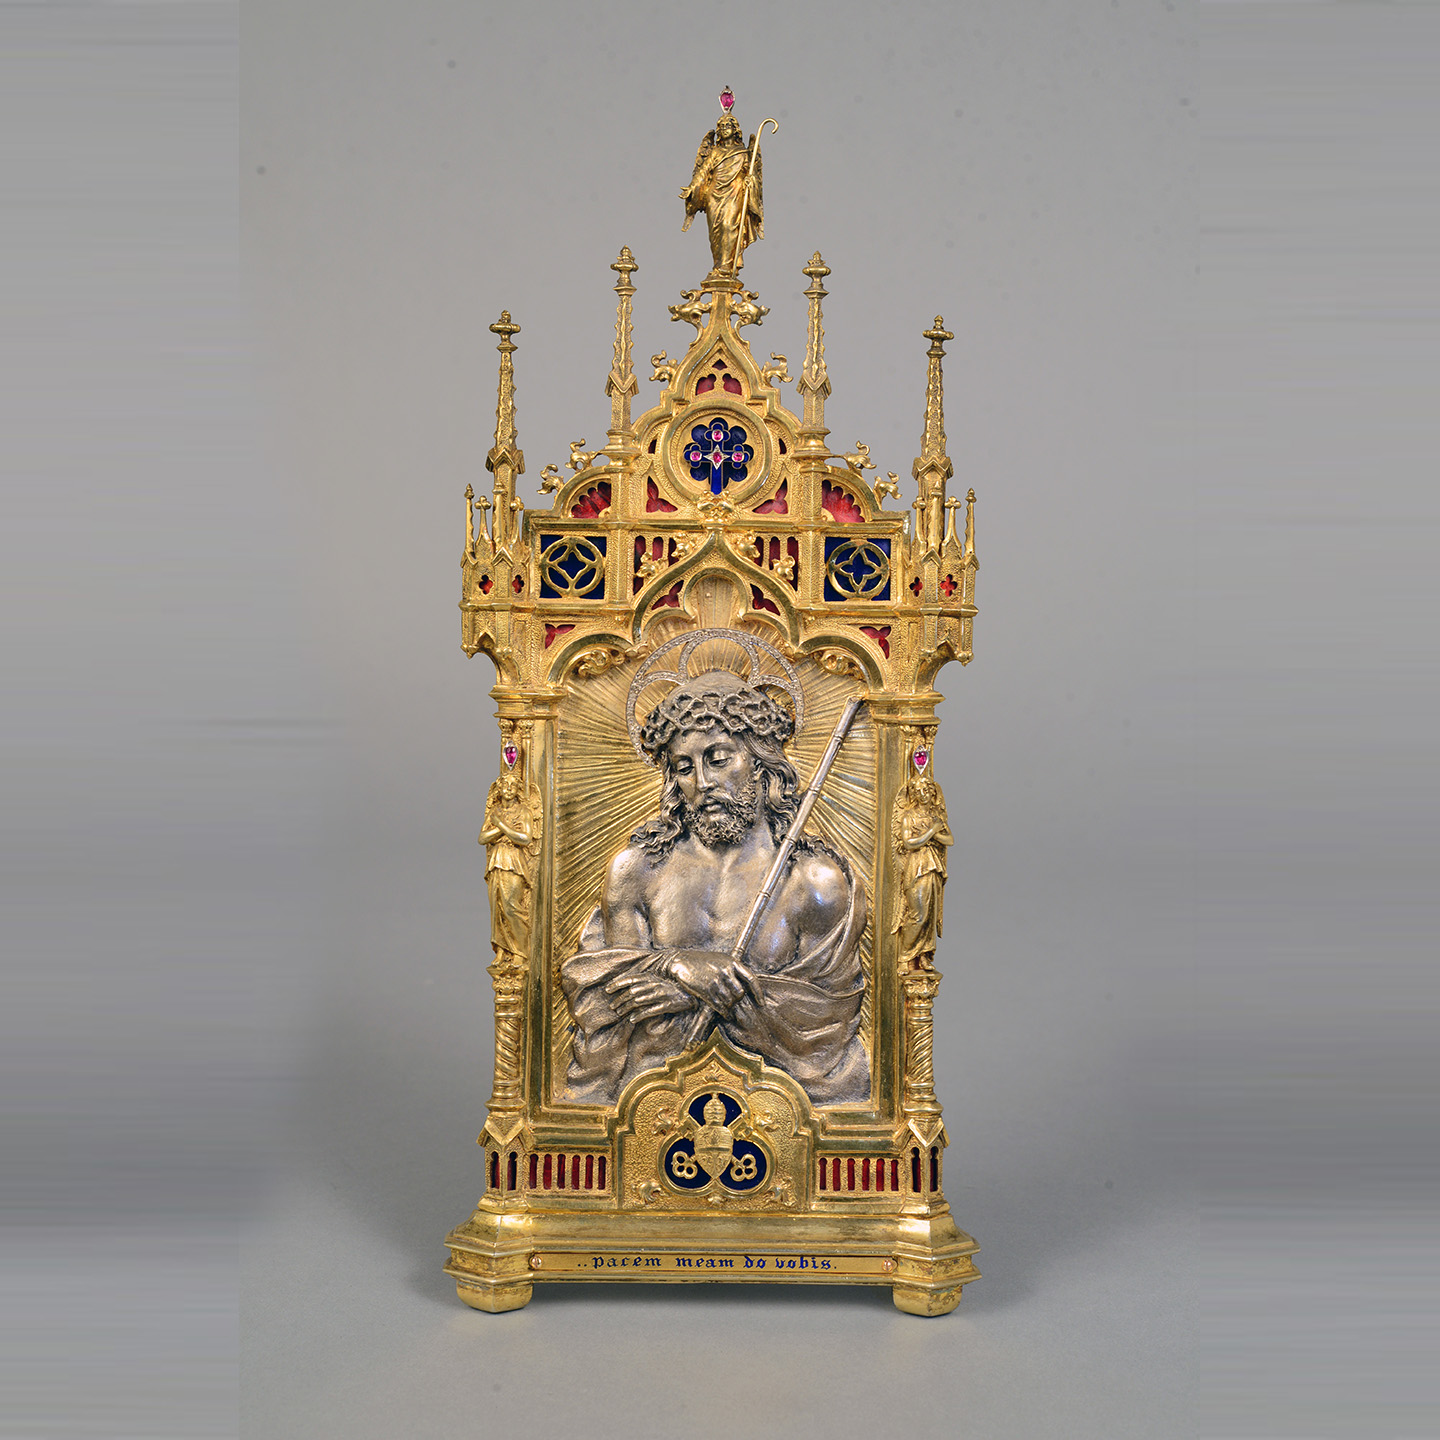 Ecce Homo: Altarpiece of Pope Leo XIII (r. 1878-1903)